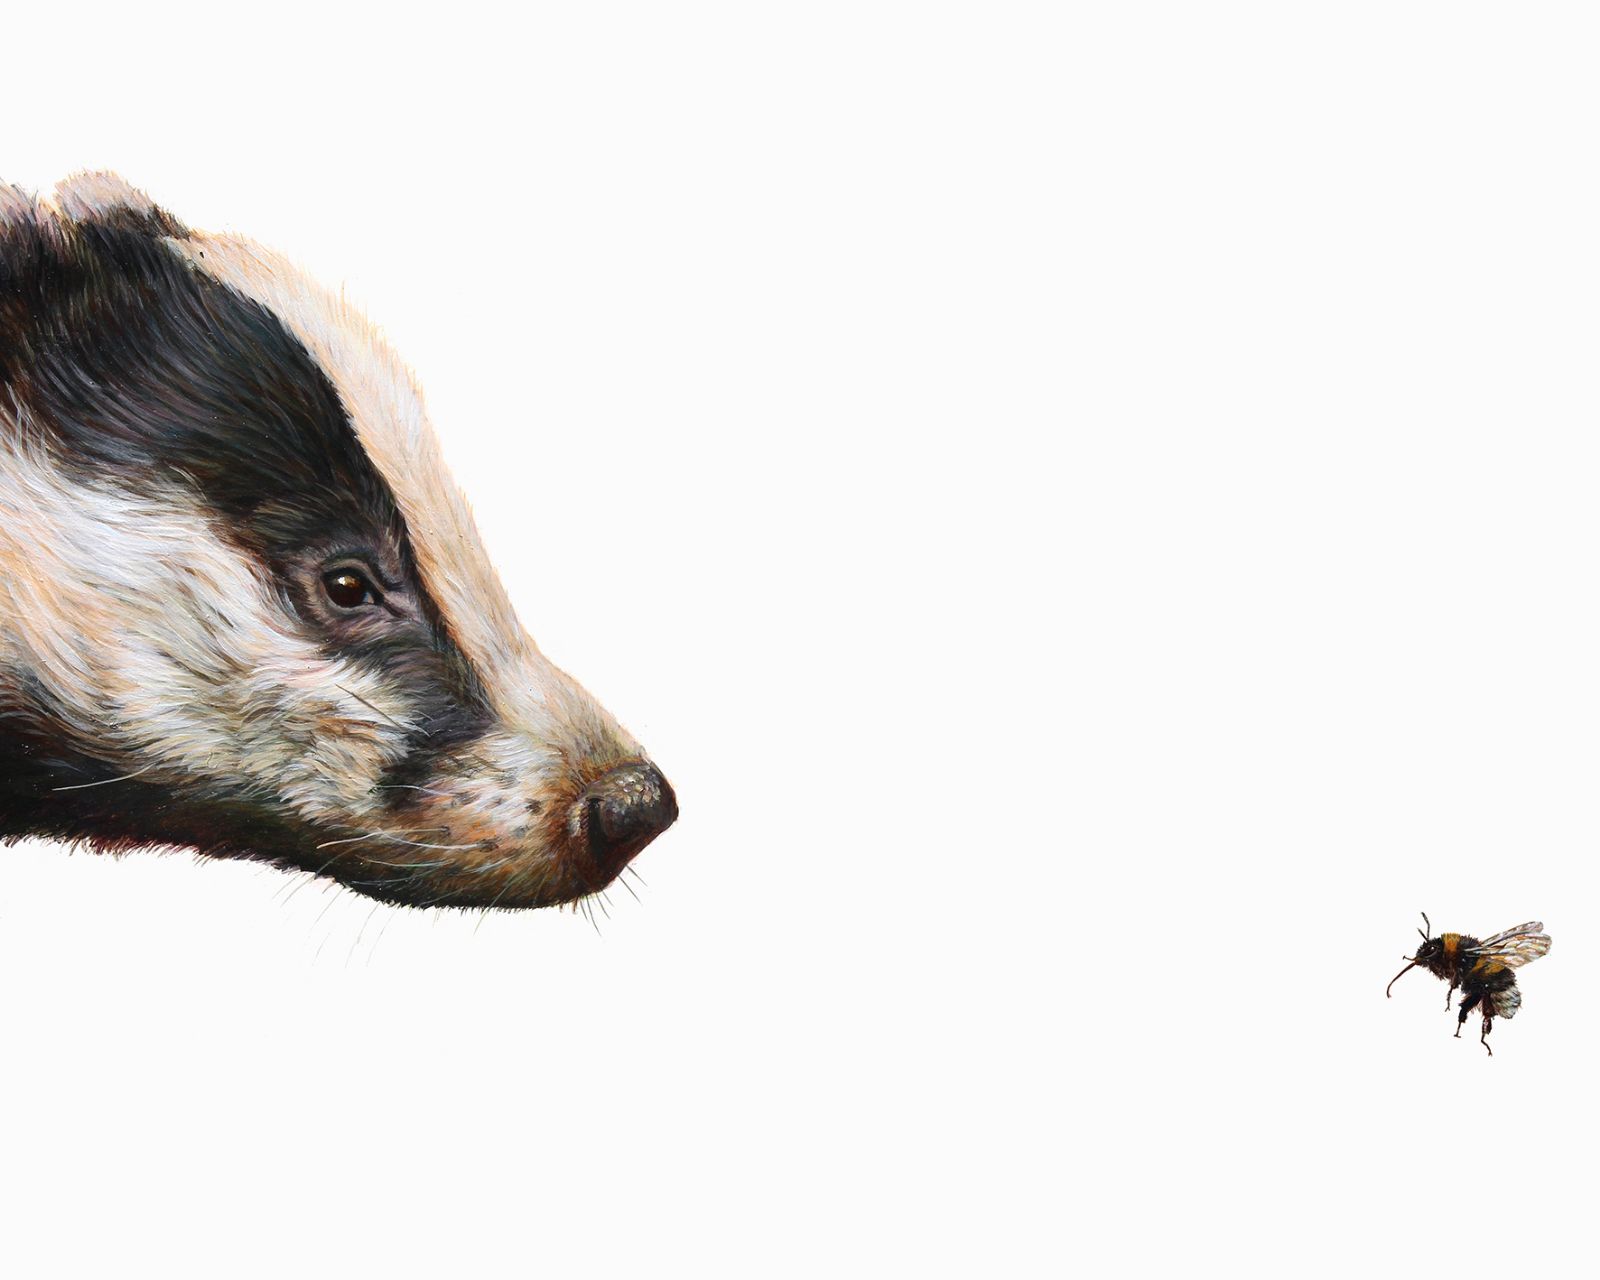 Top Predator: Badger & Bee by Hazel Mountford